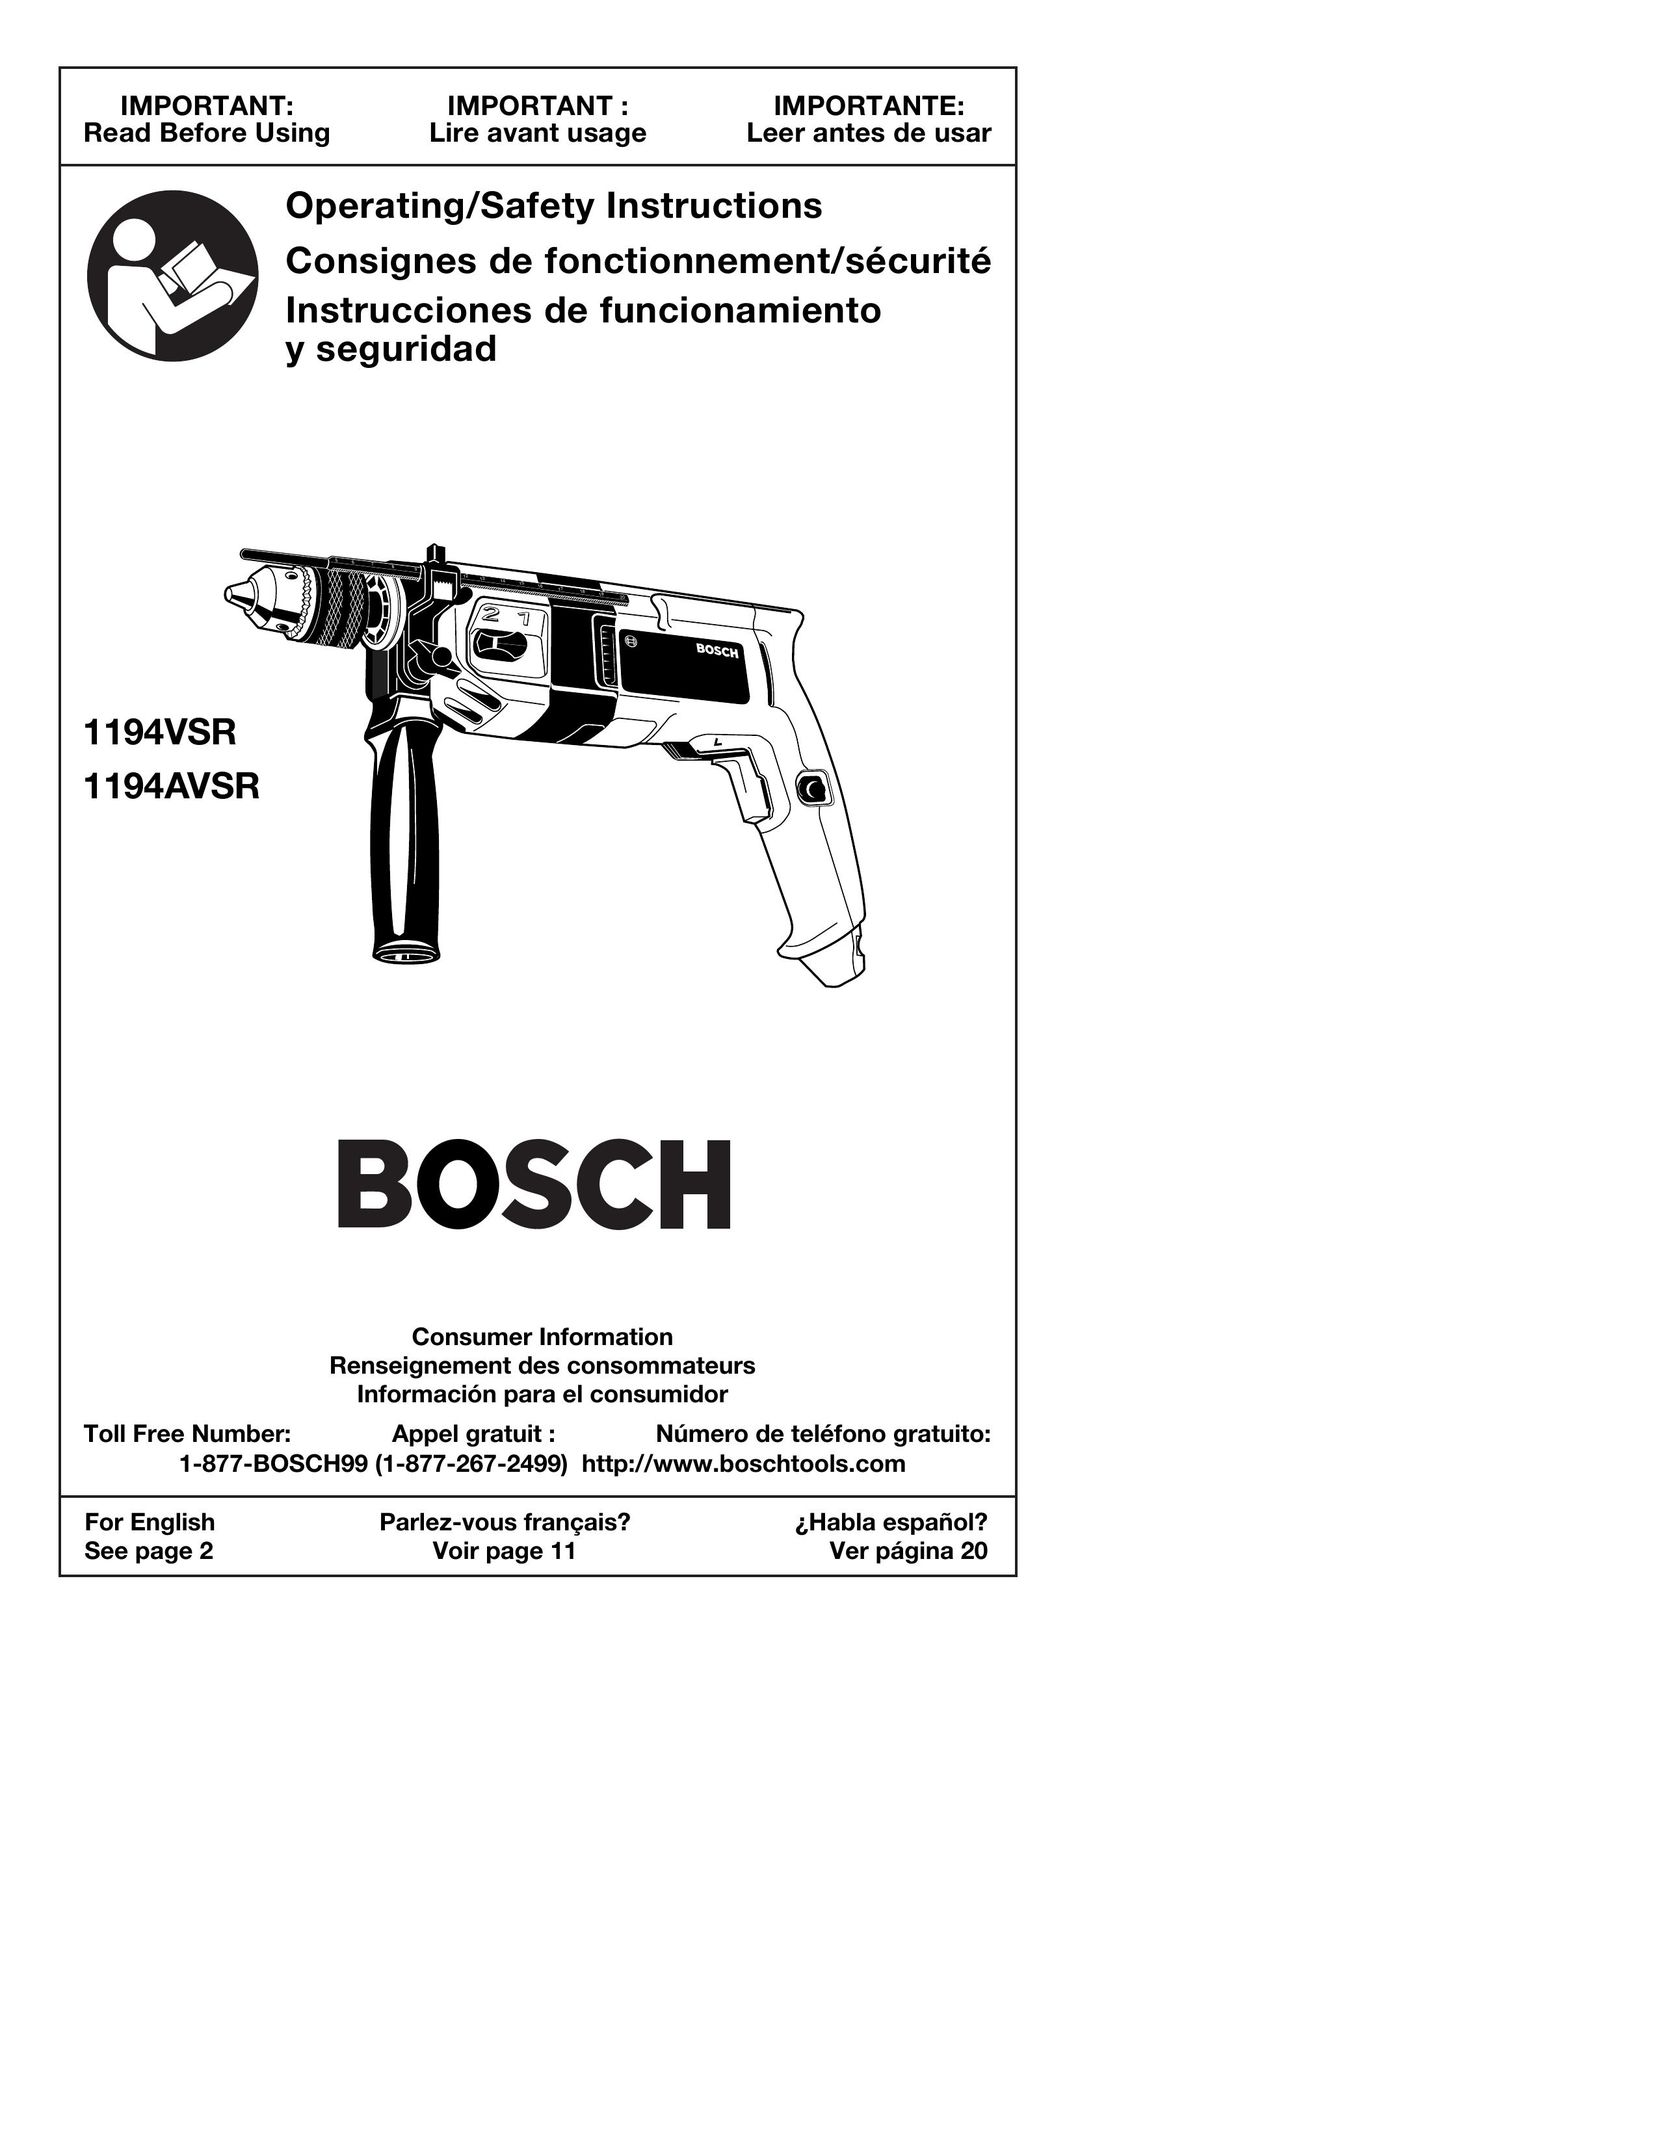 Bosch Power Tools 1194AVSR Impact Driver User Manual